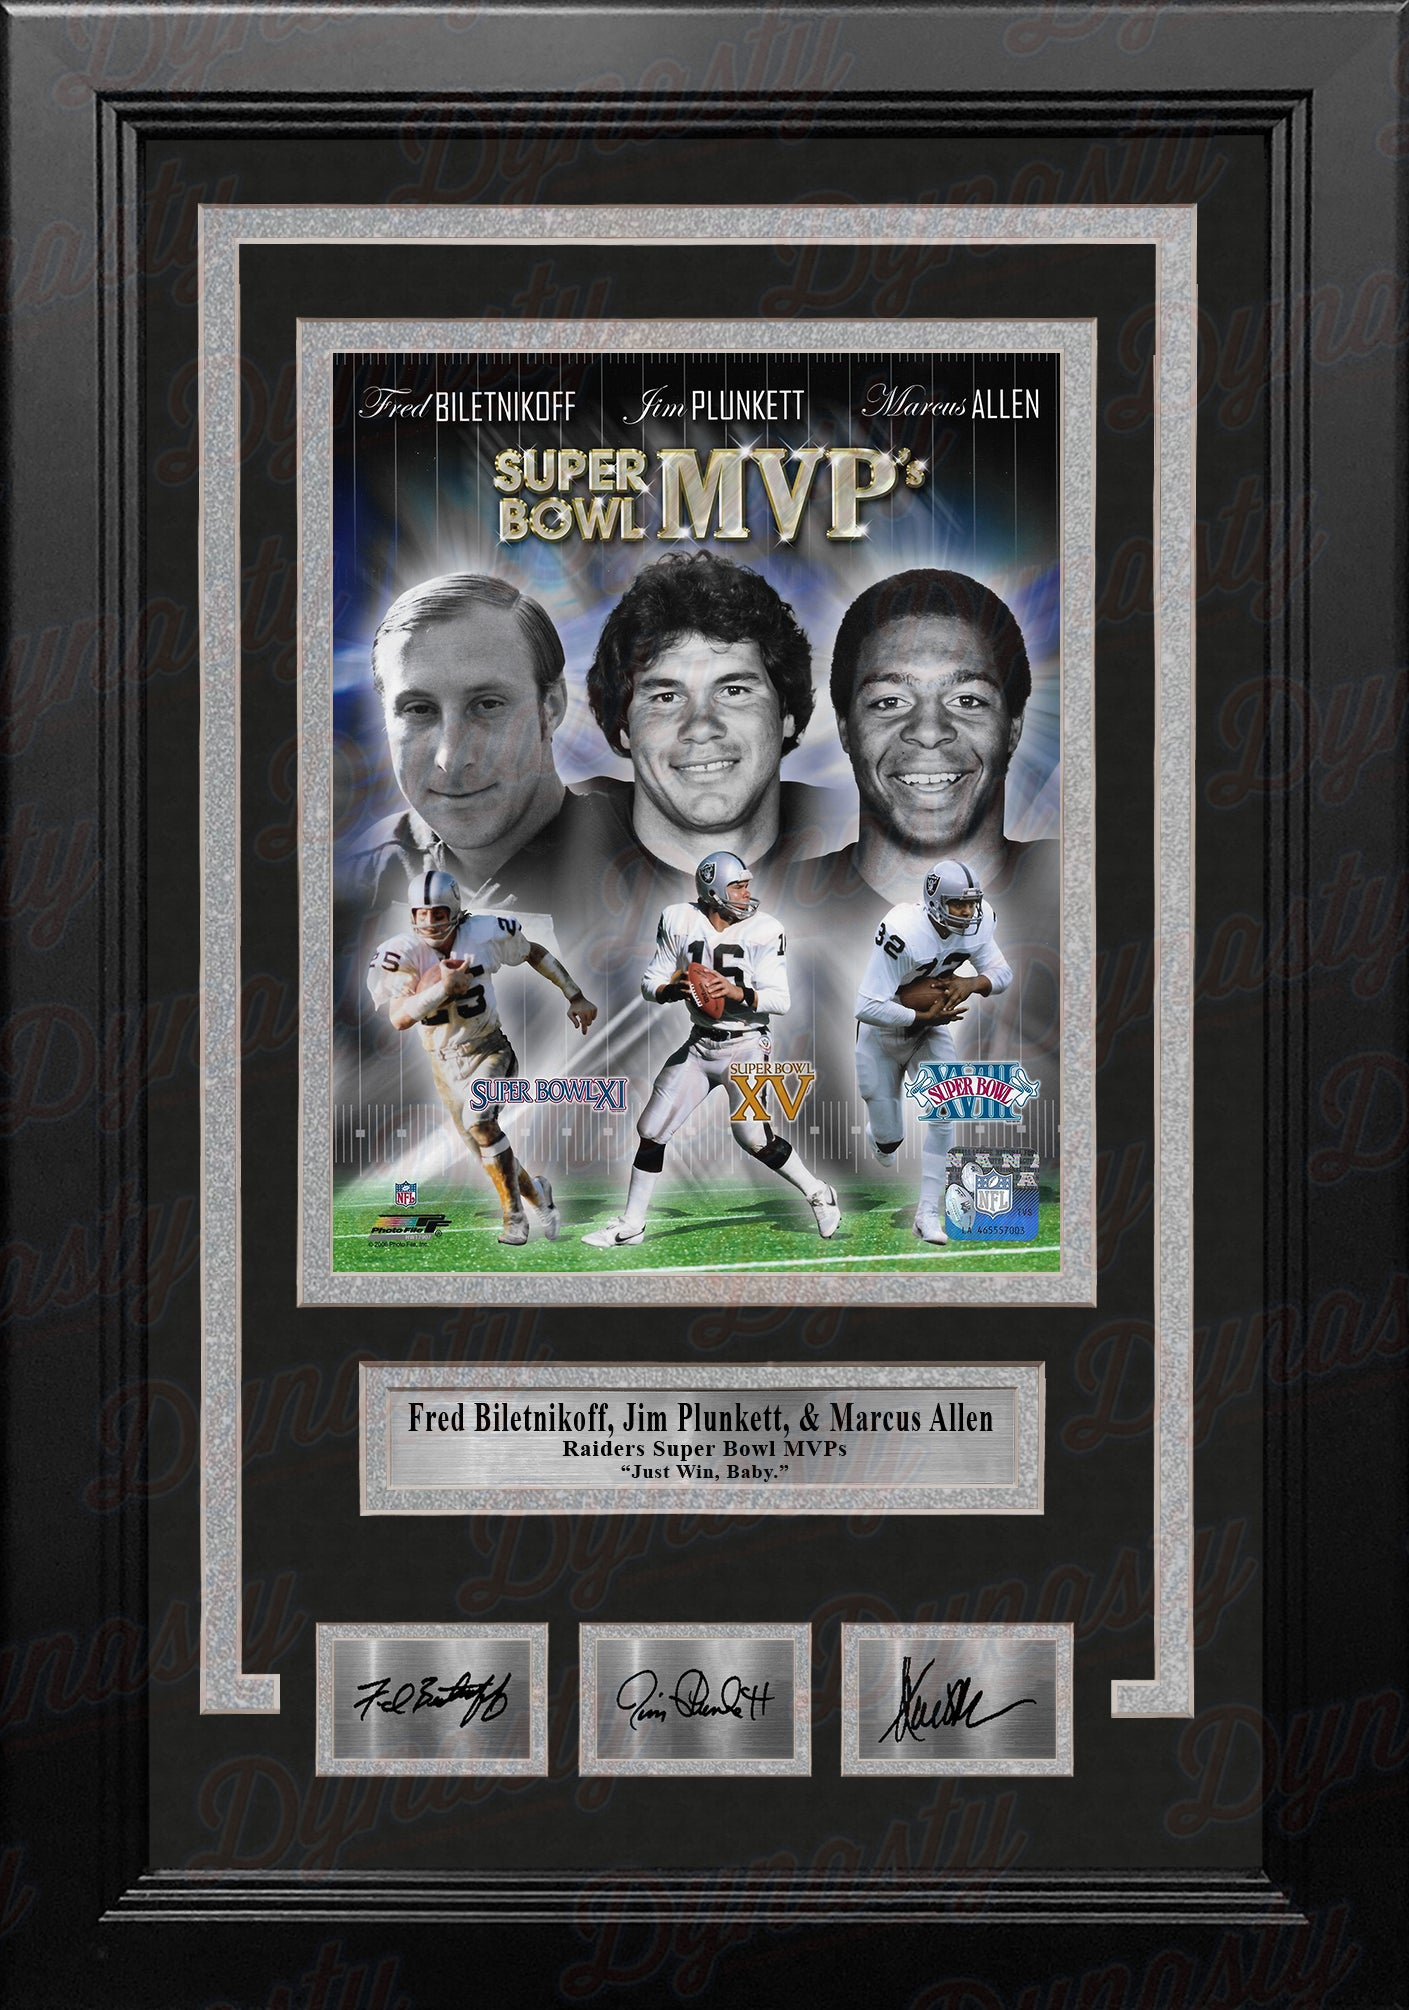 Fred Biletnikoff, Jim Plunkett, & Marcus Allen Raiders 8x10 Framed Photo with Engraved Autographs - Dynasty Sports & Framing 